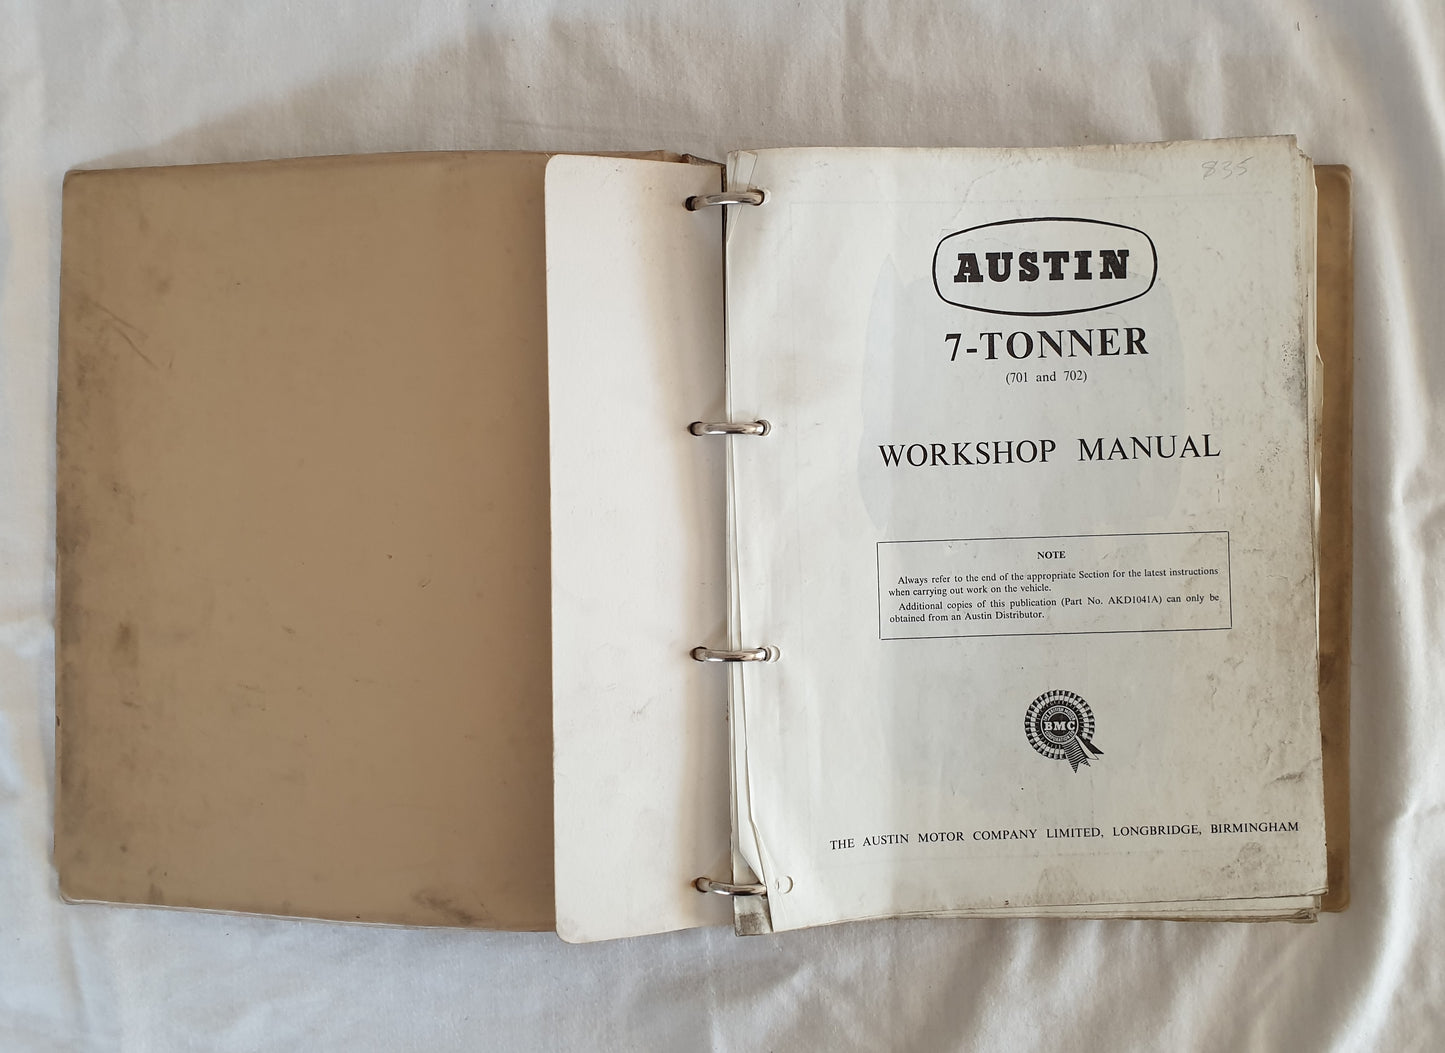 Austin 7-Tonner (701 and 702) Workshop Manual